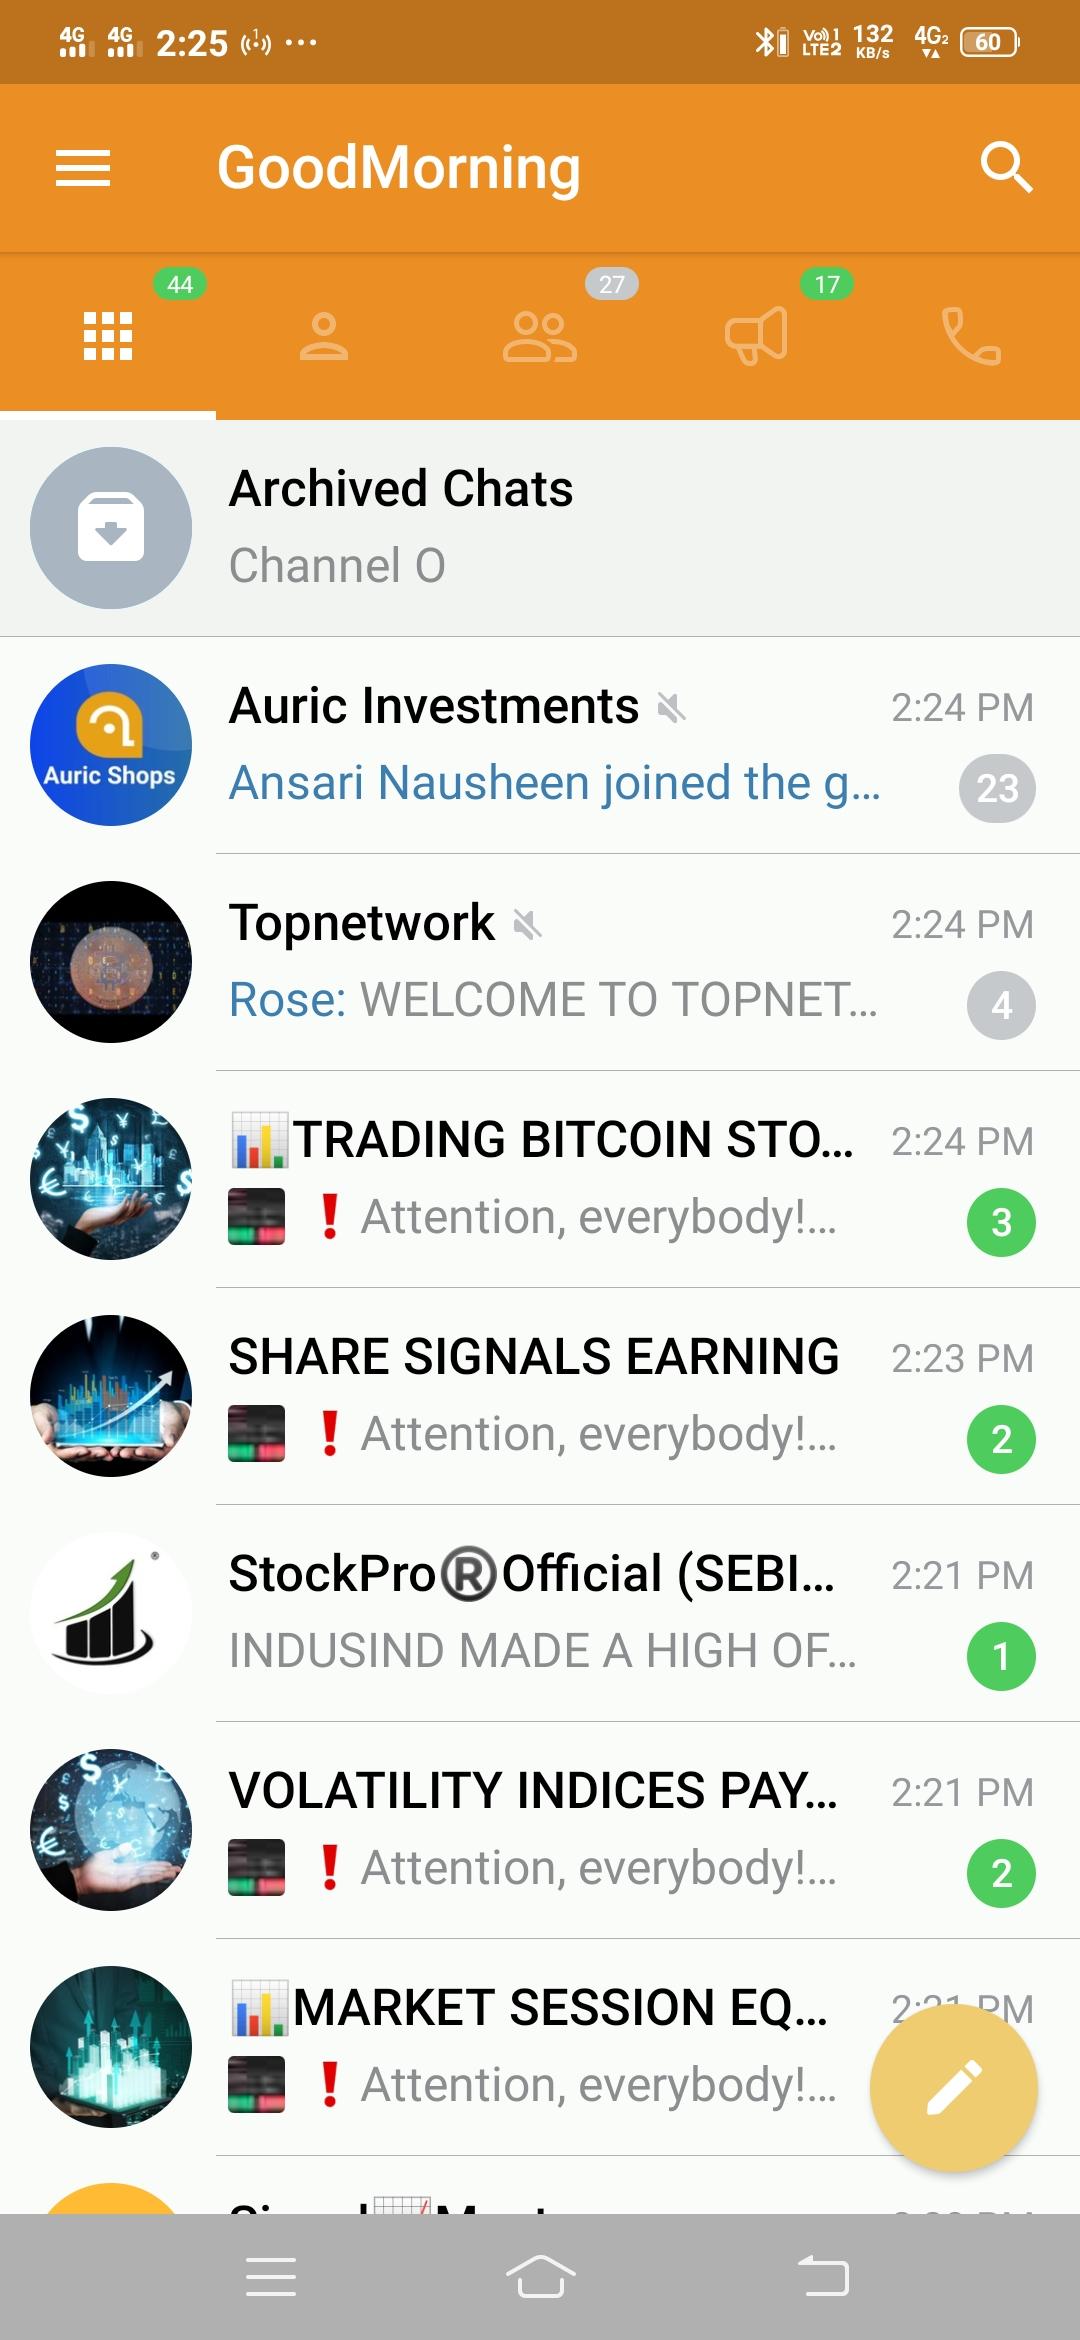 GoodMorning Messenger - New Telegram 1.0.25 Screenshot 3